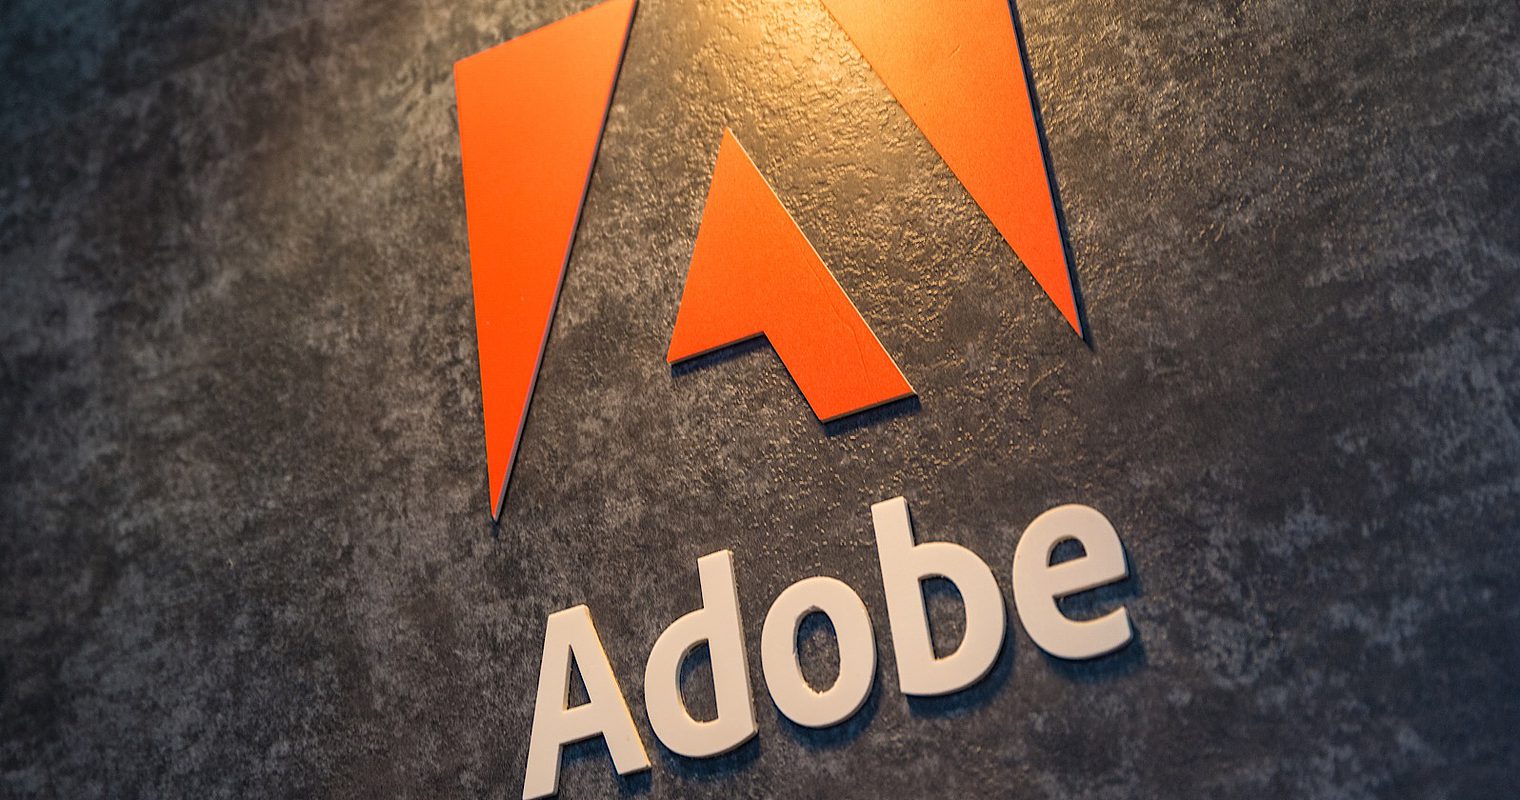 Adobe Acquires Magento Commerce for $1.68 Billion in Cash